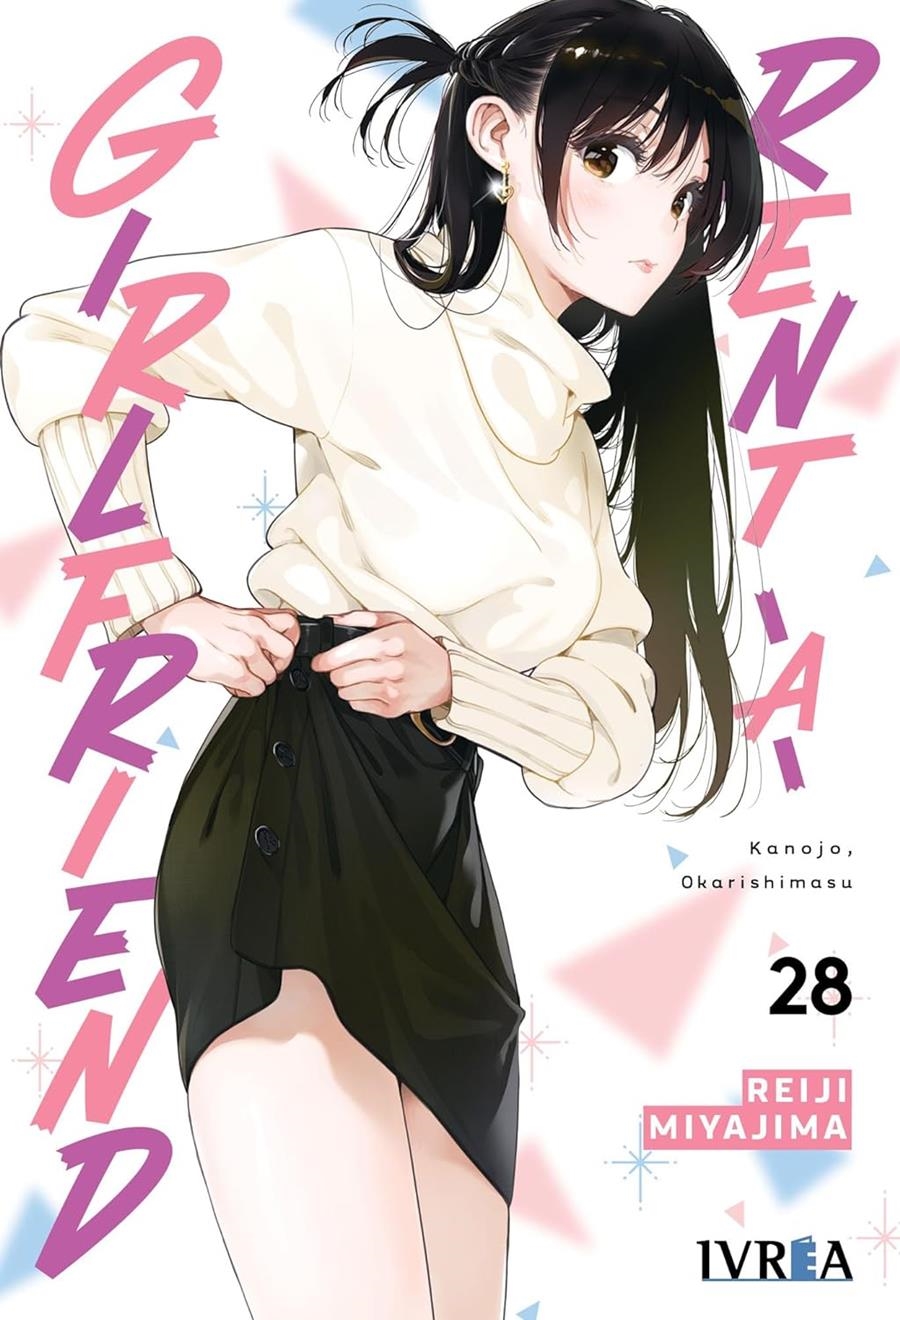 RENT-A-GIRLFRIEND Nº28 [RUSTICA] | MIYAJIMA, REIJI | Akira Comics  - libreria donde comprar comics, juegos y libros online